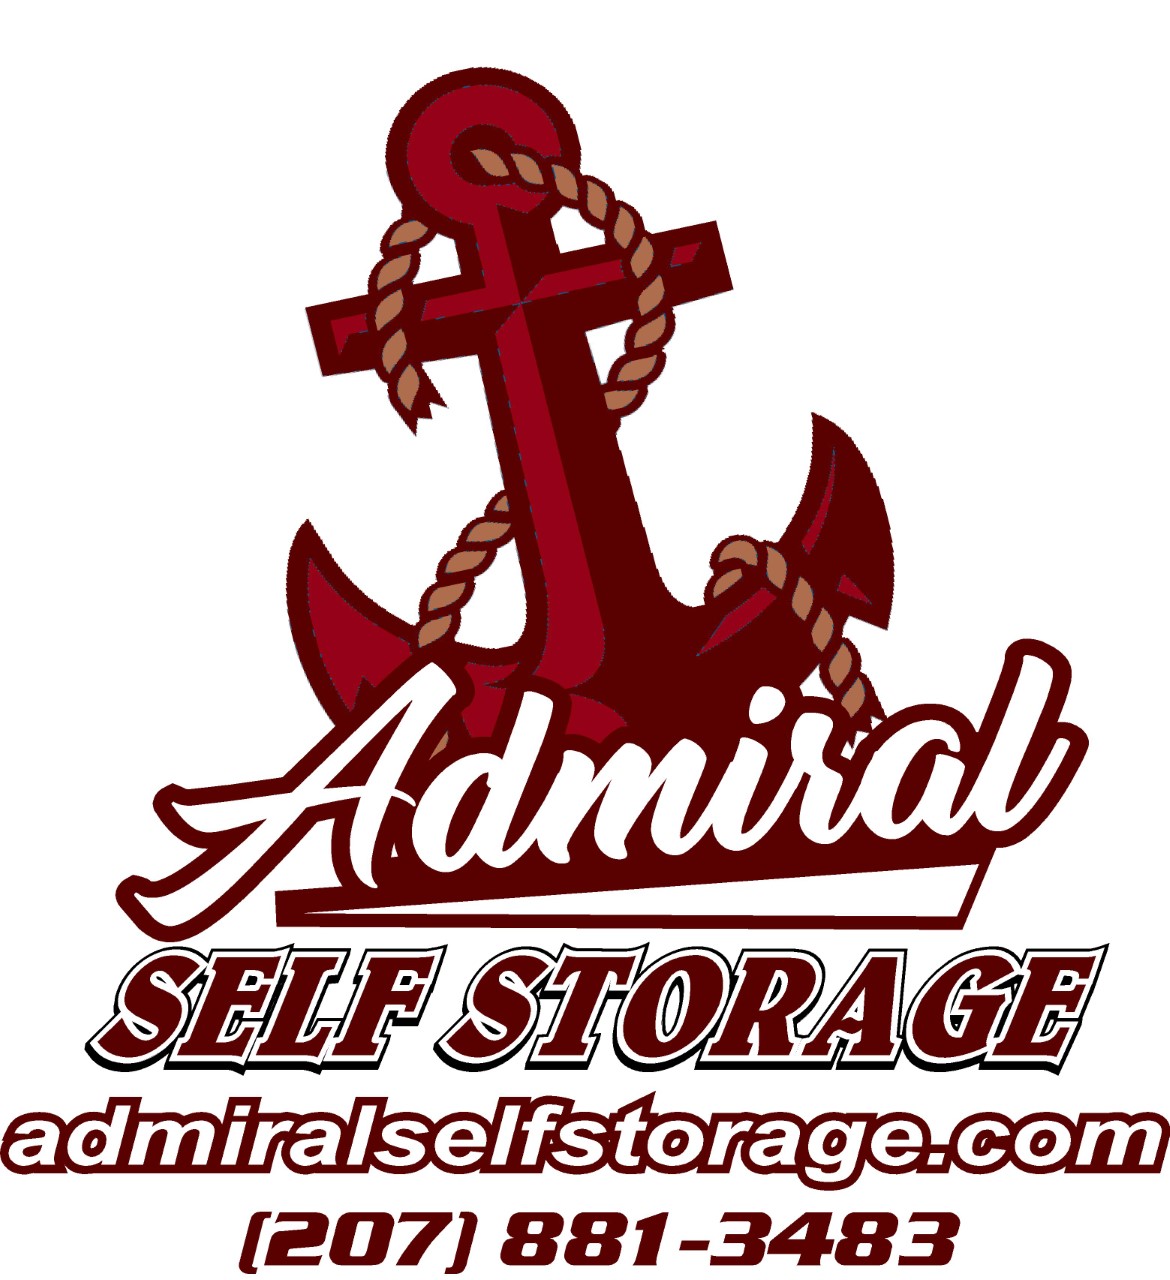 Admiral Self Storage